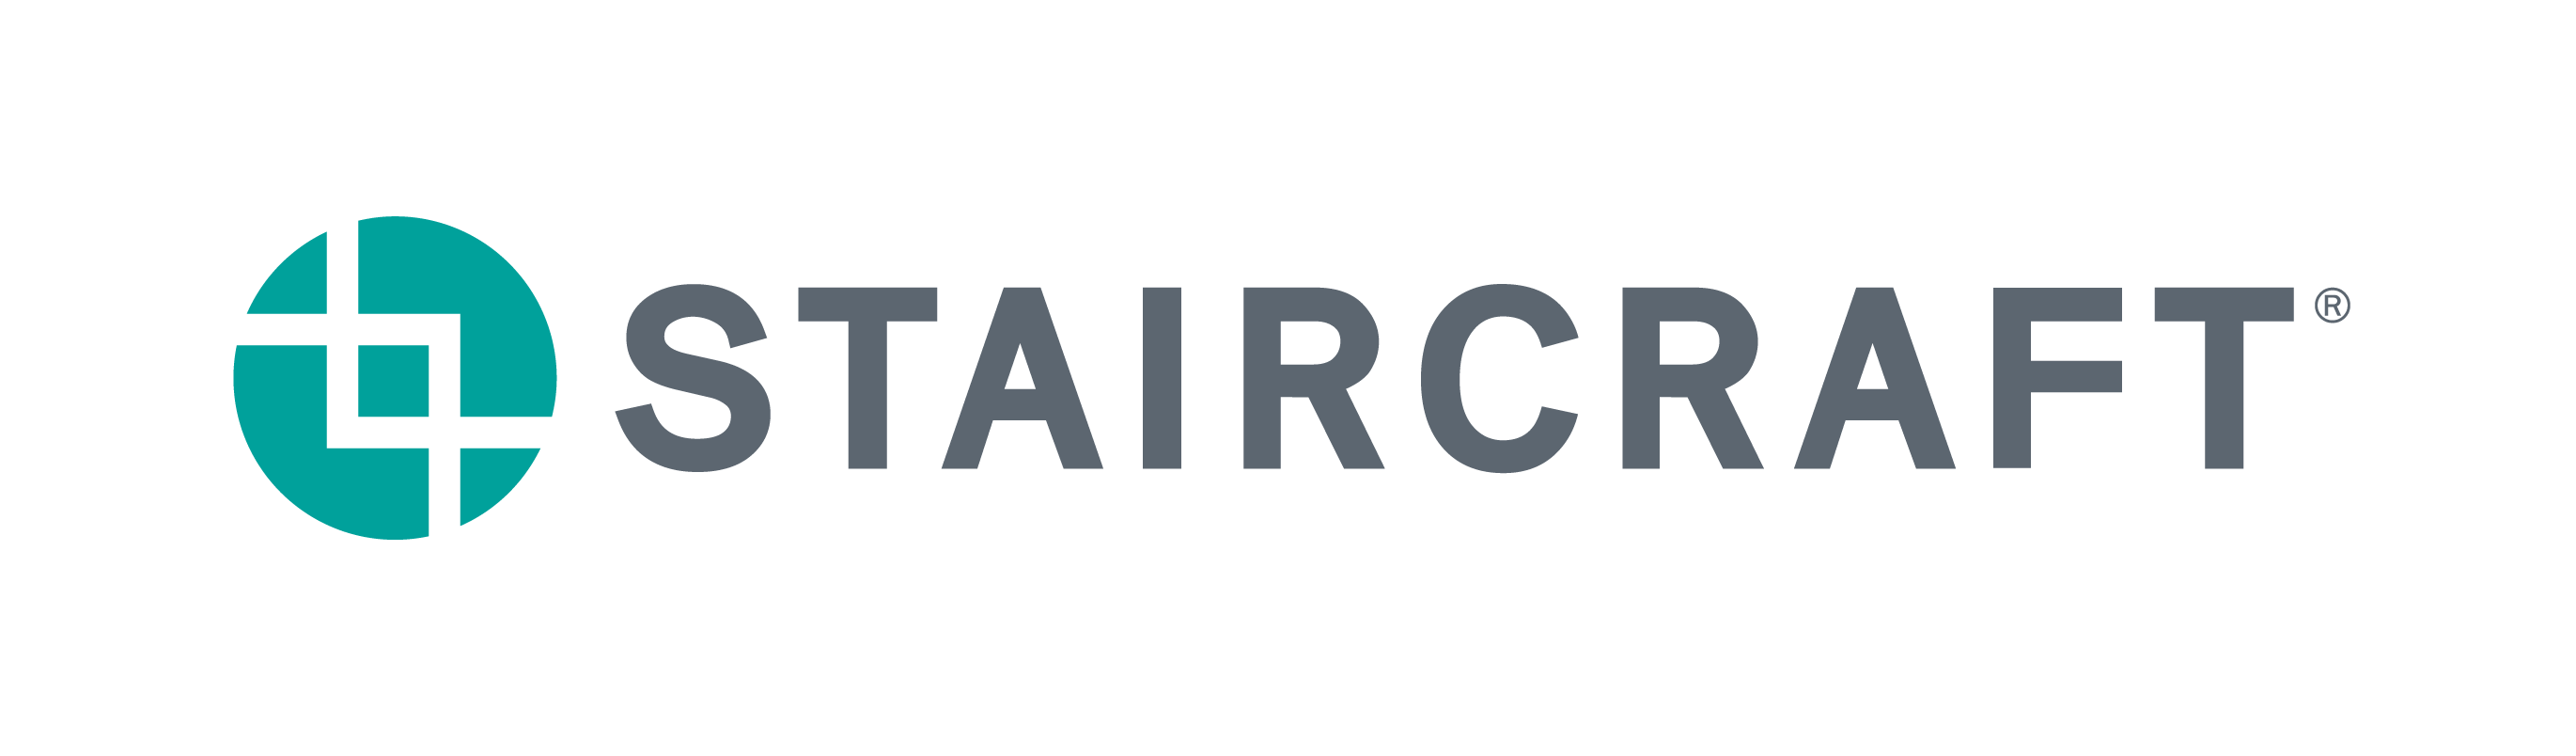 Staircraft logo